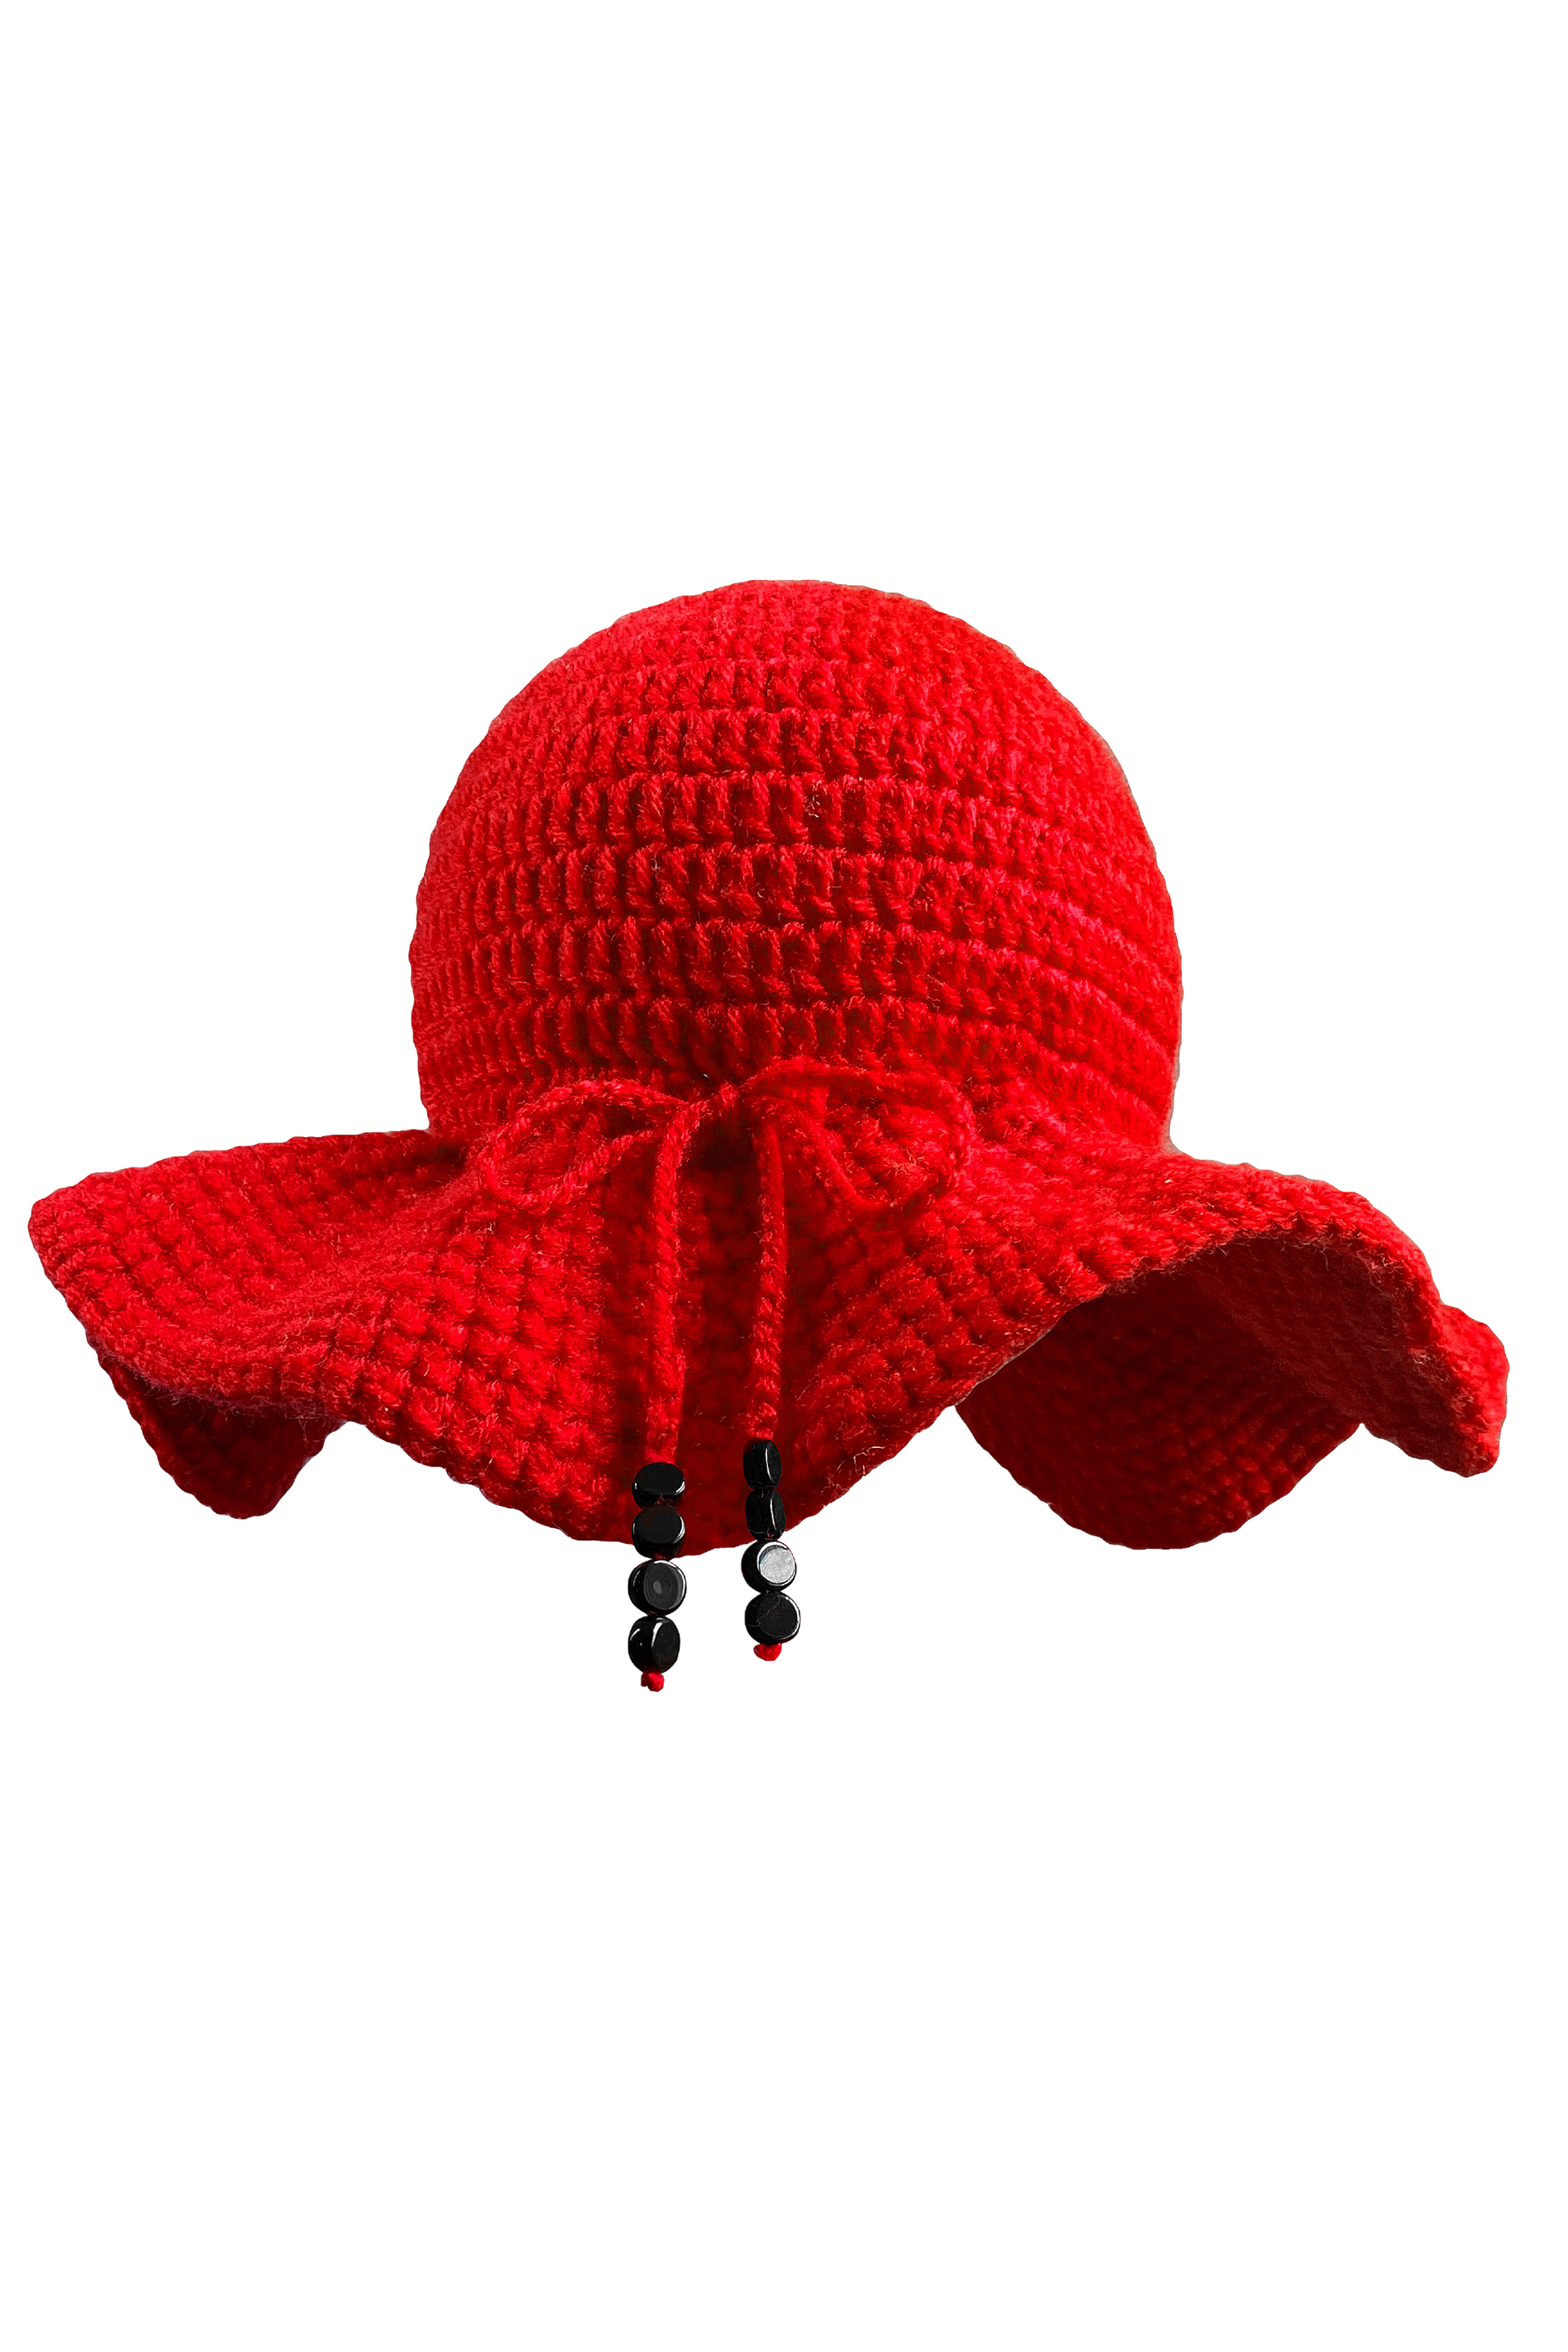 TANIJAY CROCHET SUN HAT Celaeno Crochet Sun Hat